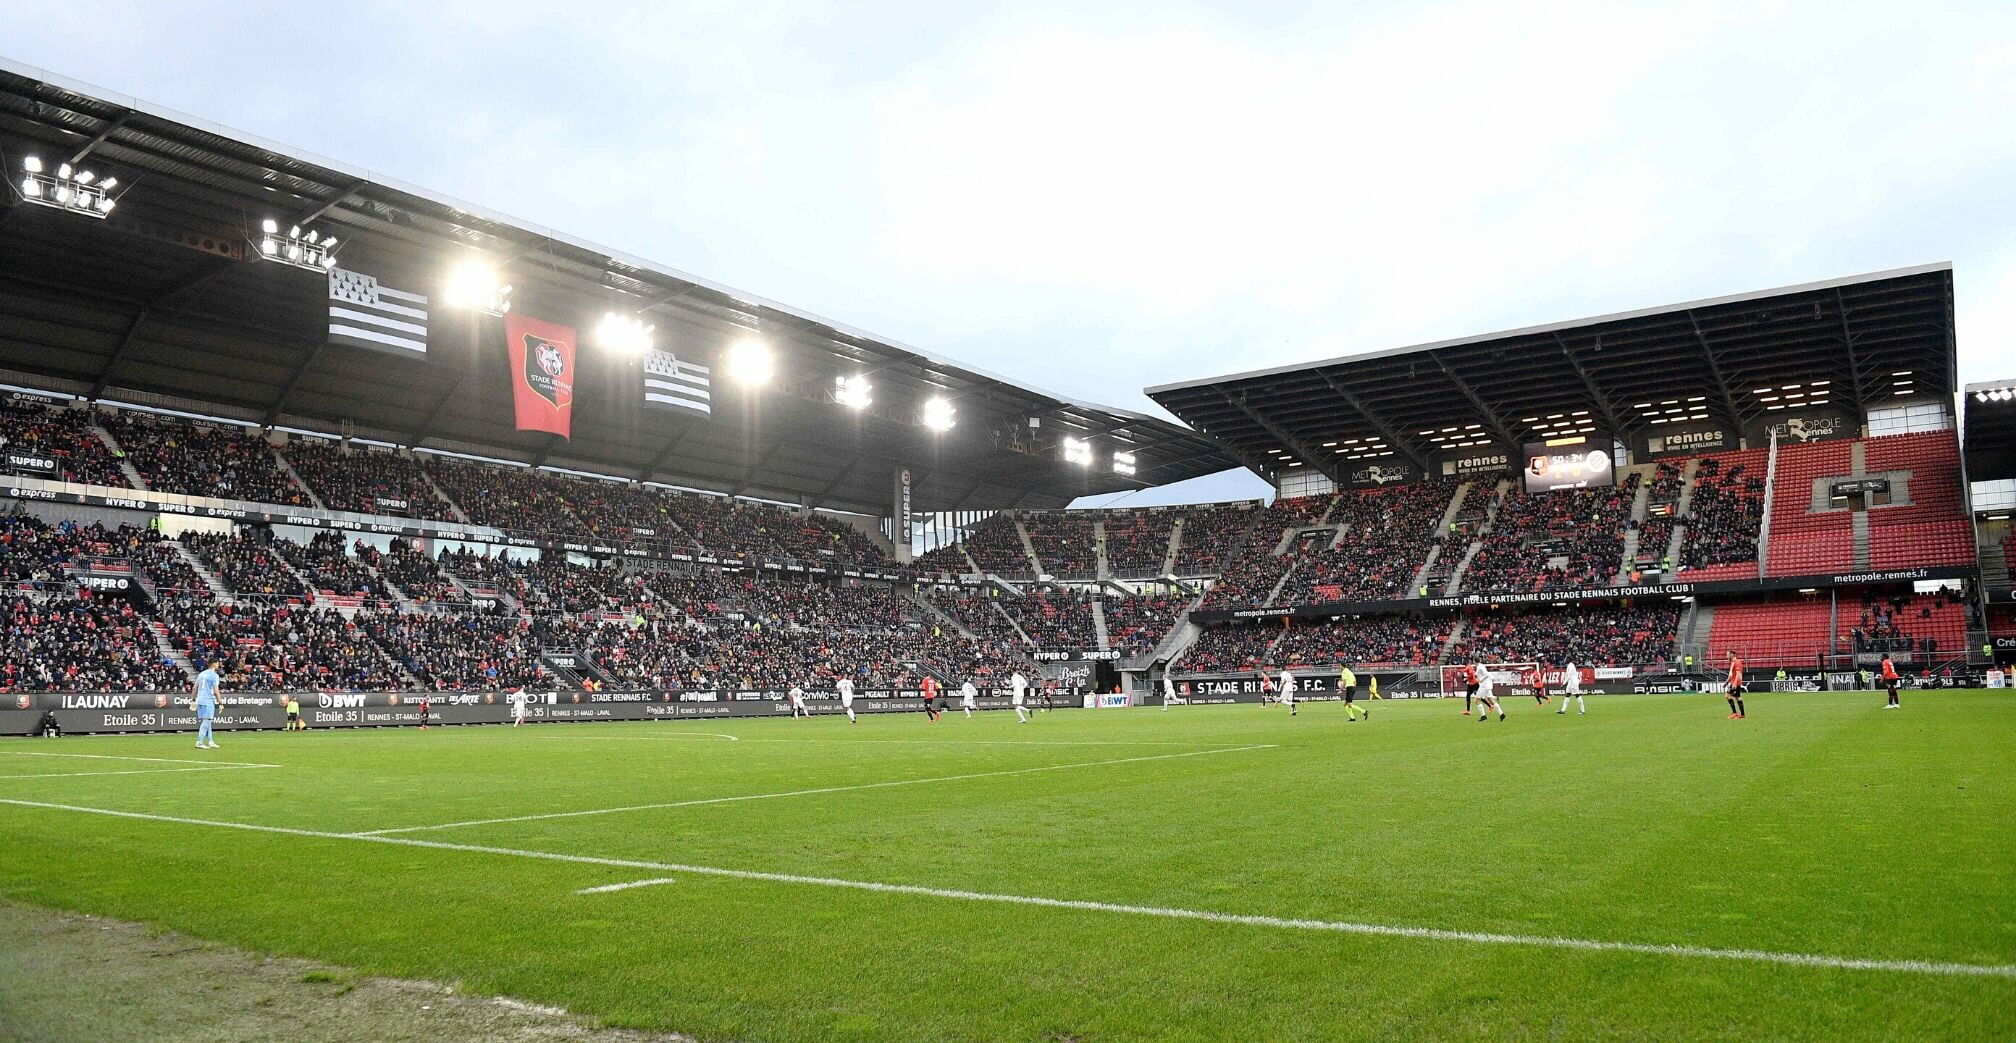 Roazhon Park Stade Rennais FC